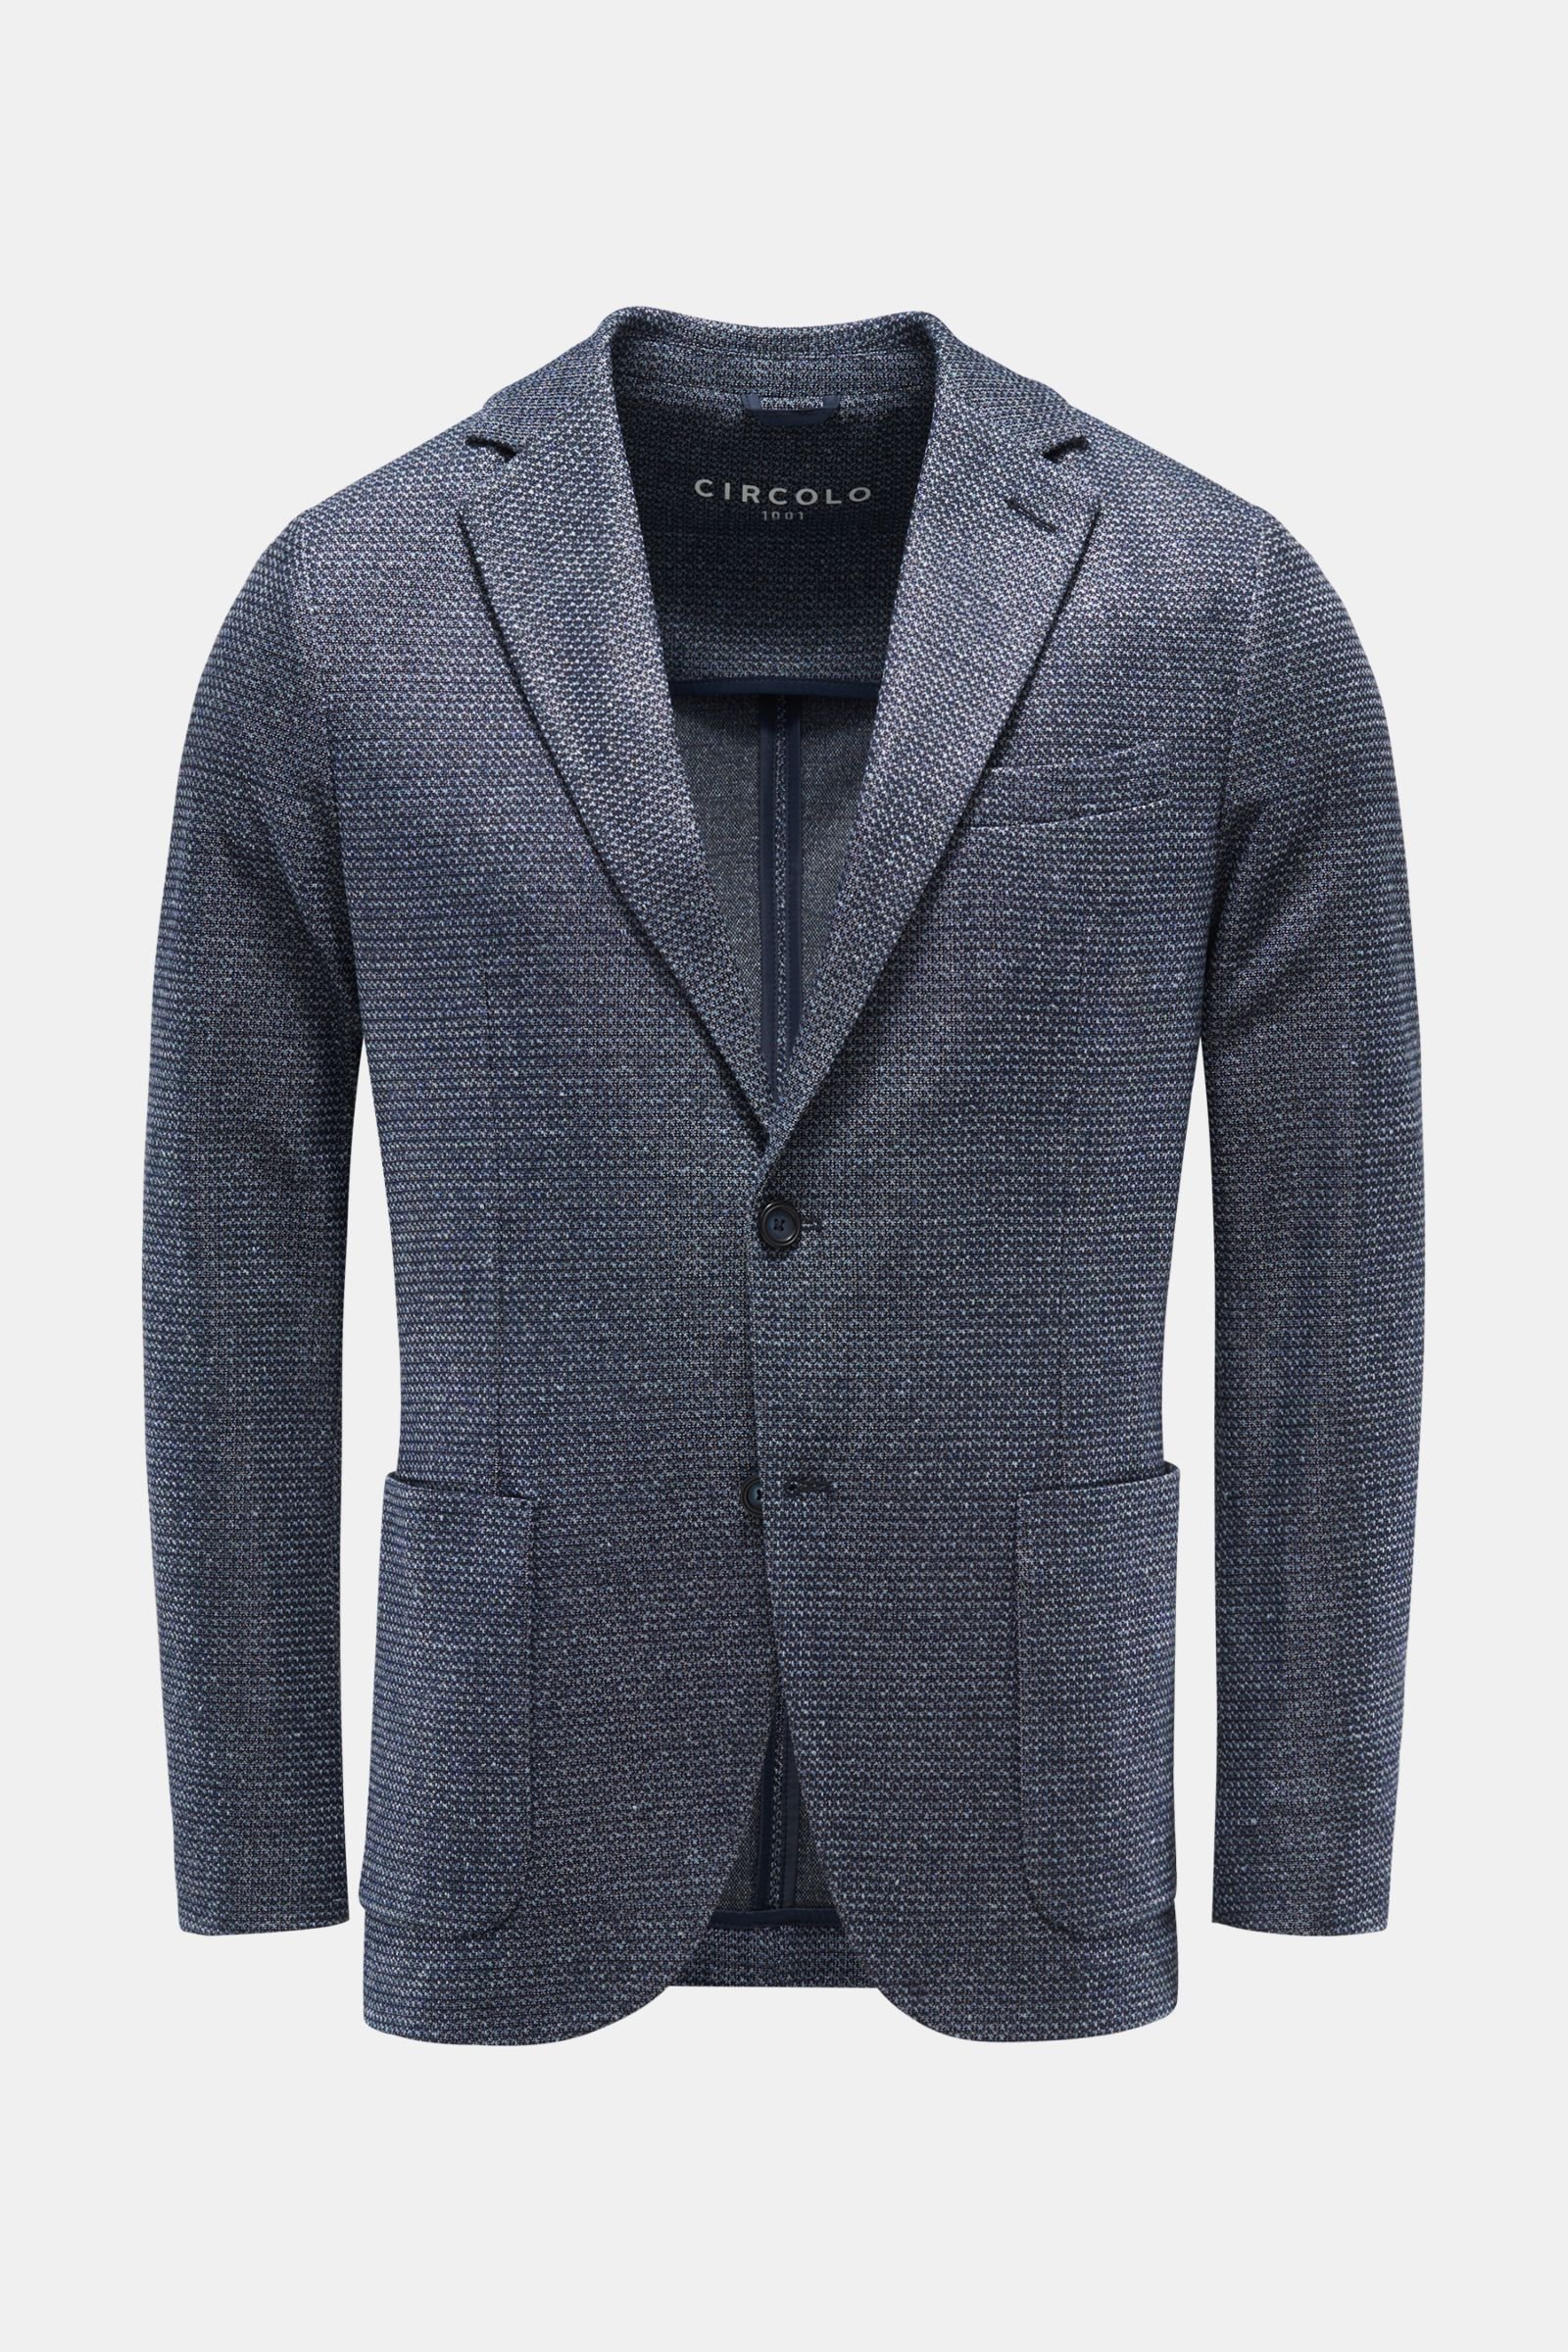 Smart-casual jacket navy/light blue